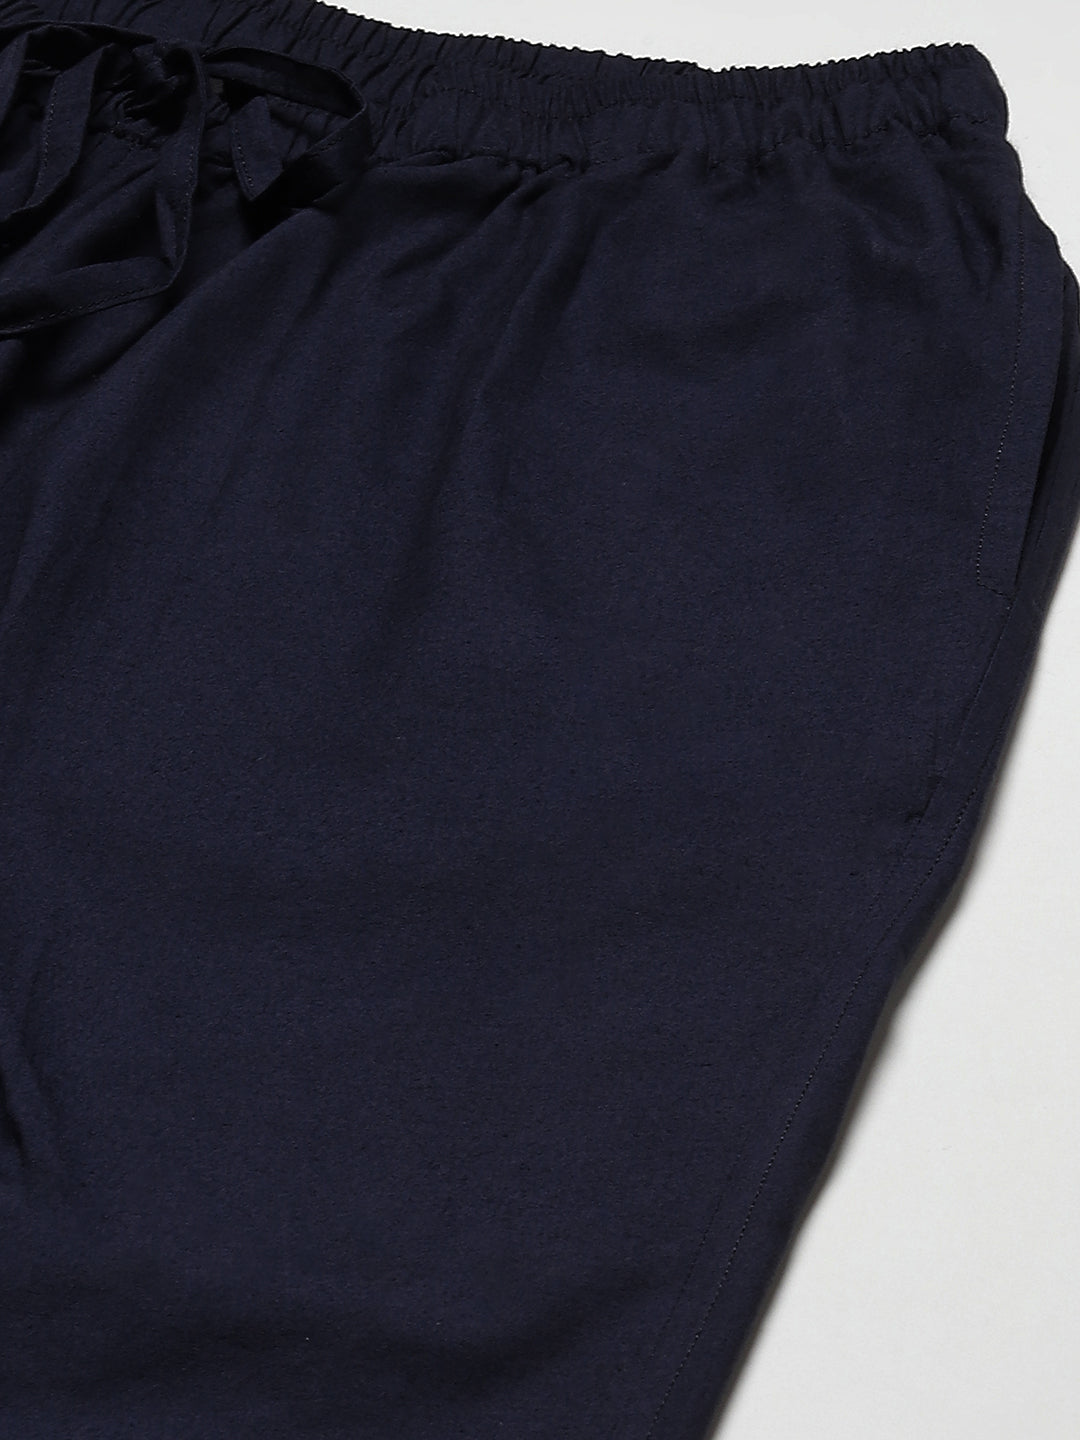 Combo Pack of 2: Navy Blue & Beige Solid Cotton Pyjamas